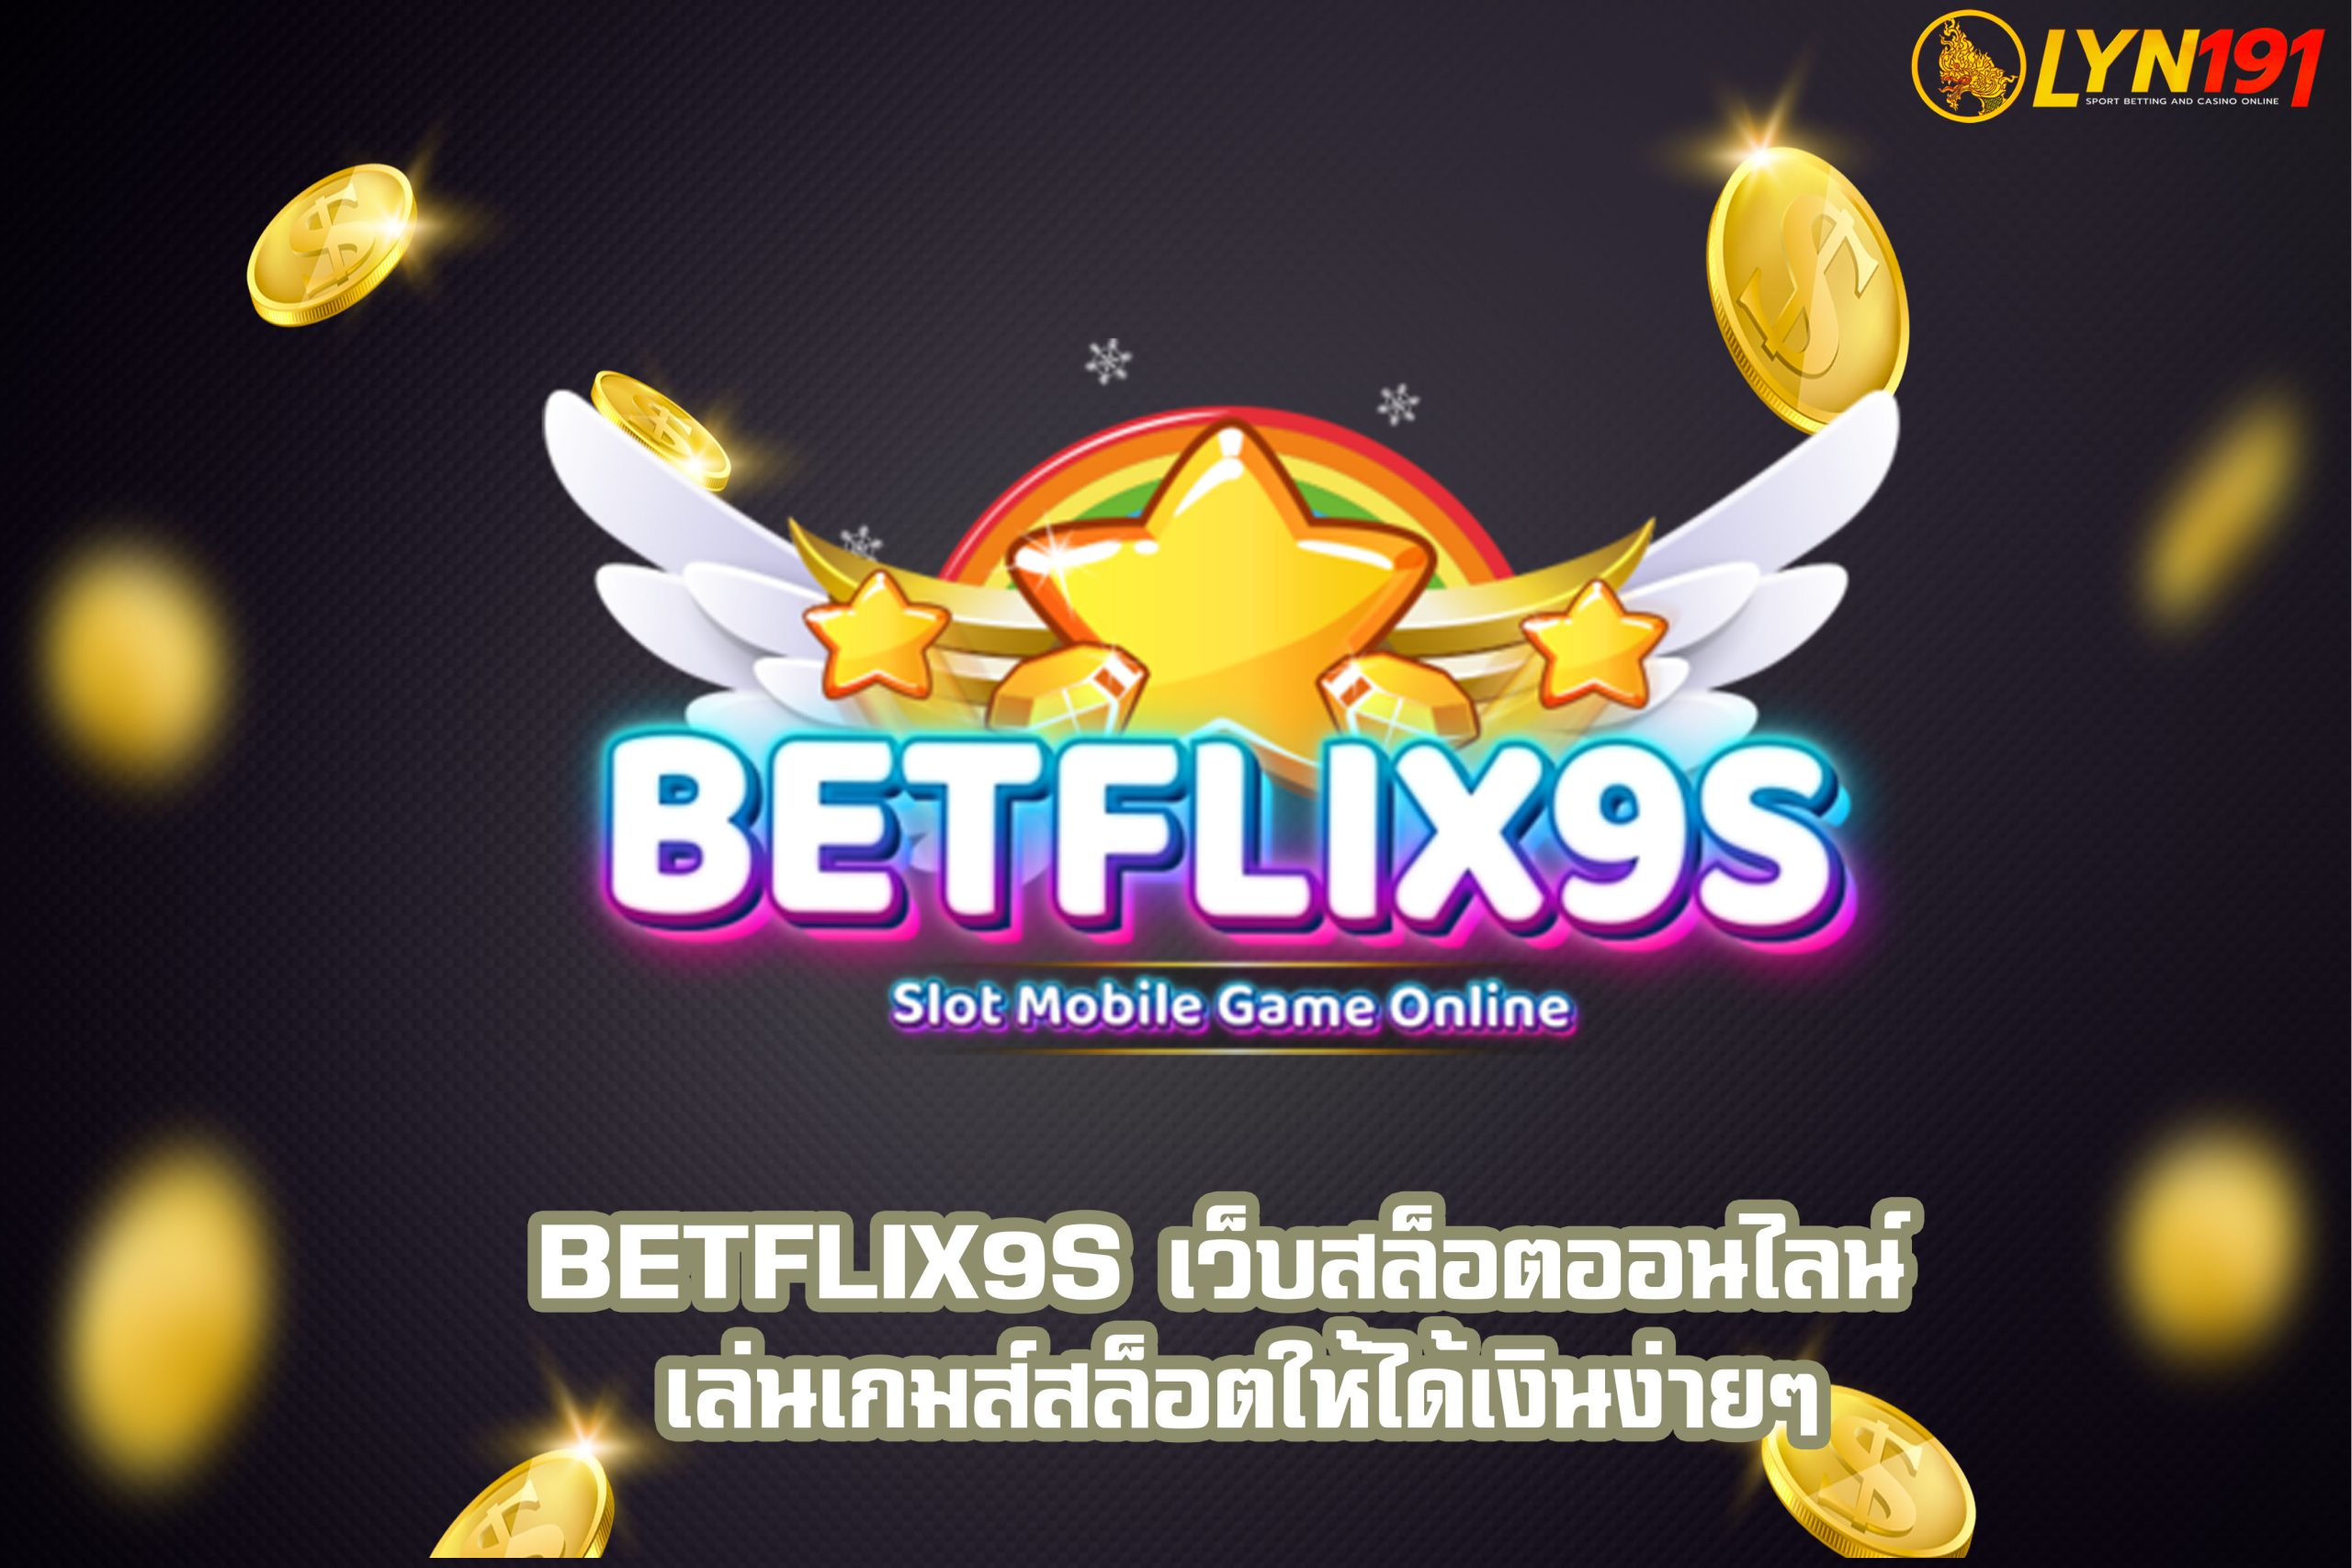 betflix9s เว็บสล็อตออนไลน์ เล่นเกมส์สล็อตให้ได้เงินง่ายๆ